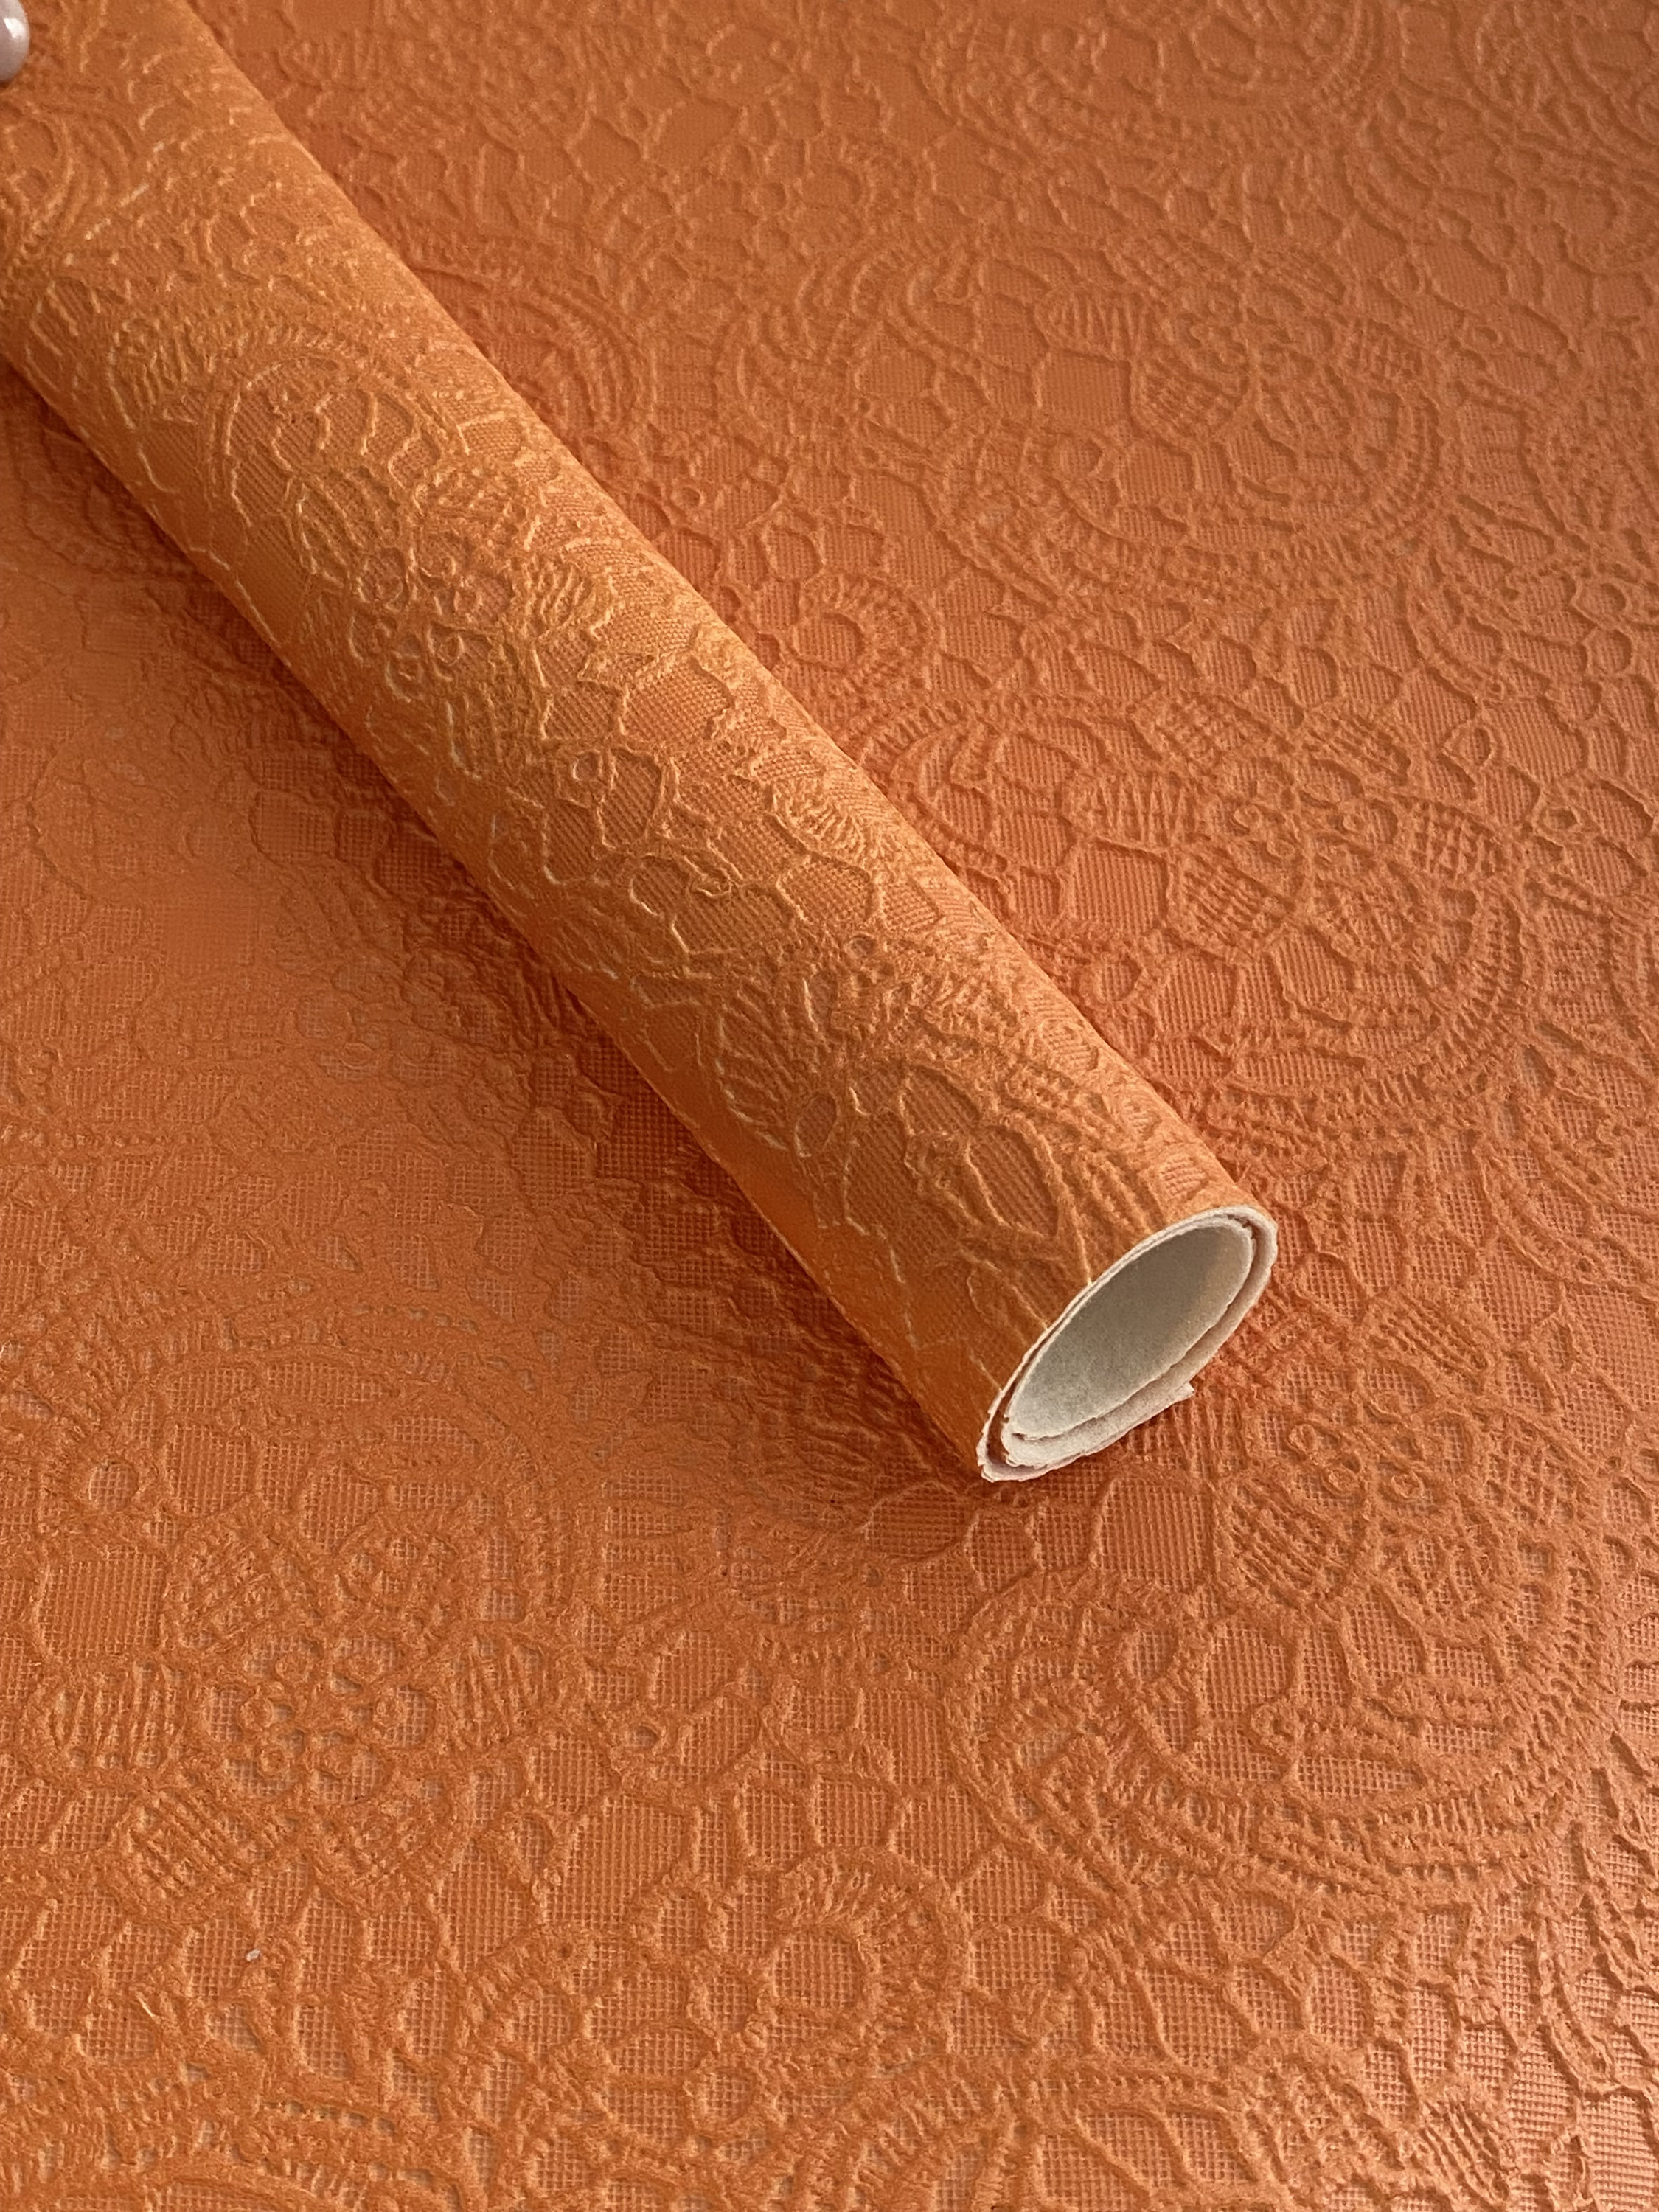 Rust Orange Cobblestone Textured Faux Leather Sheet